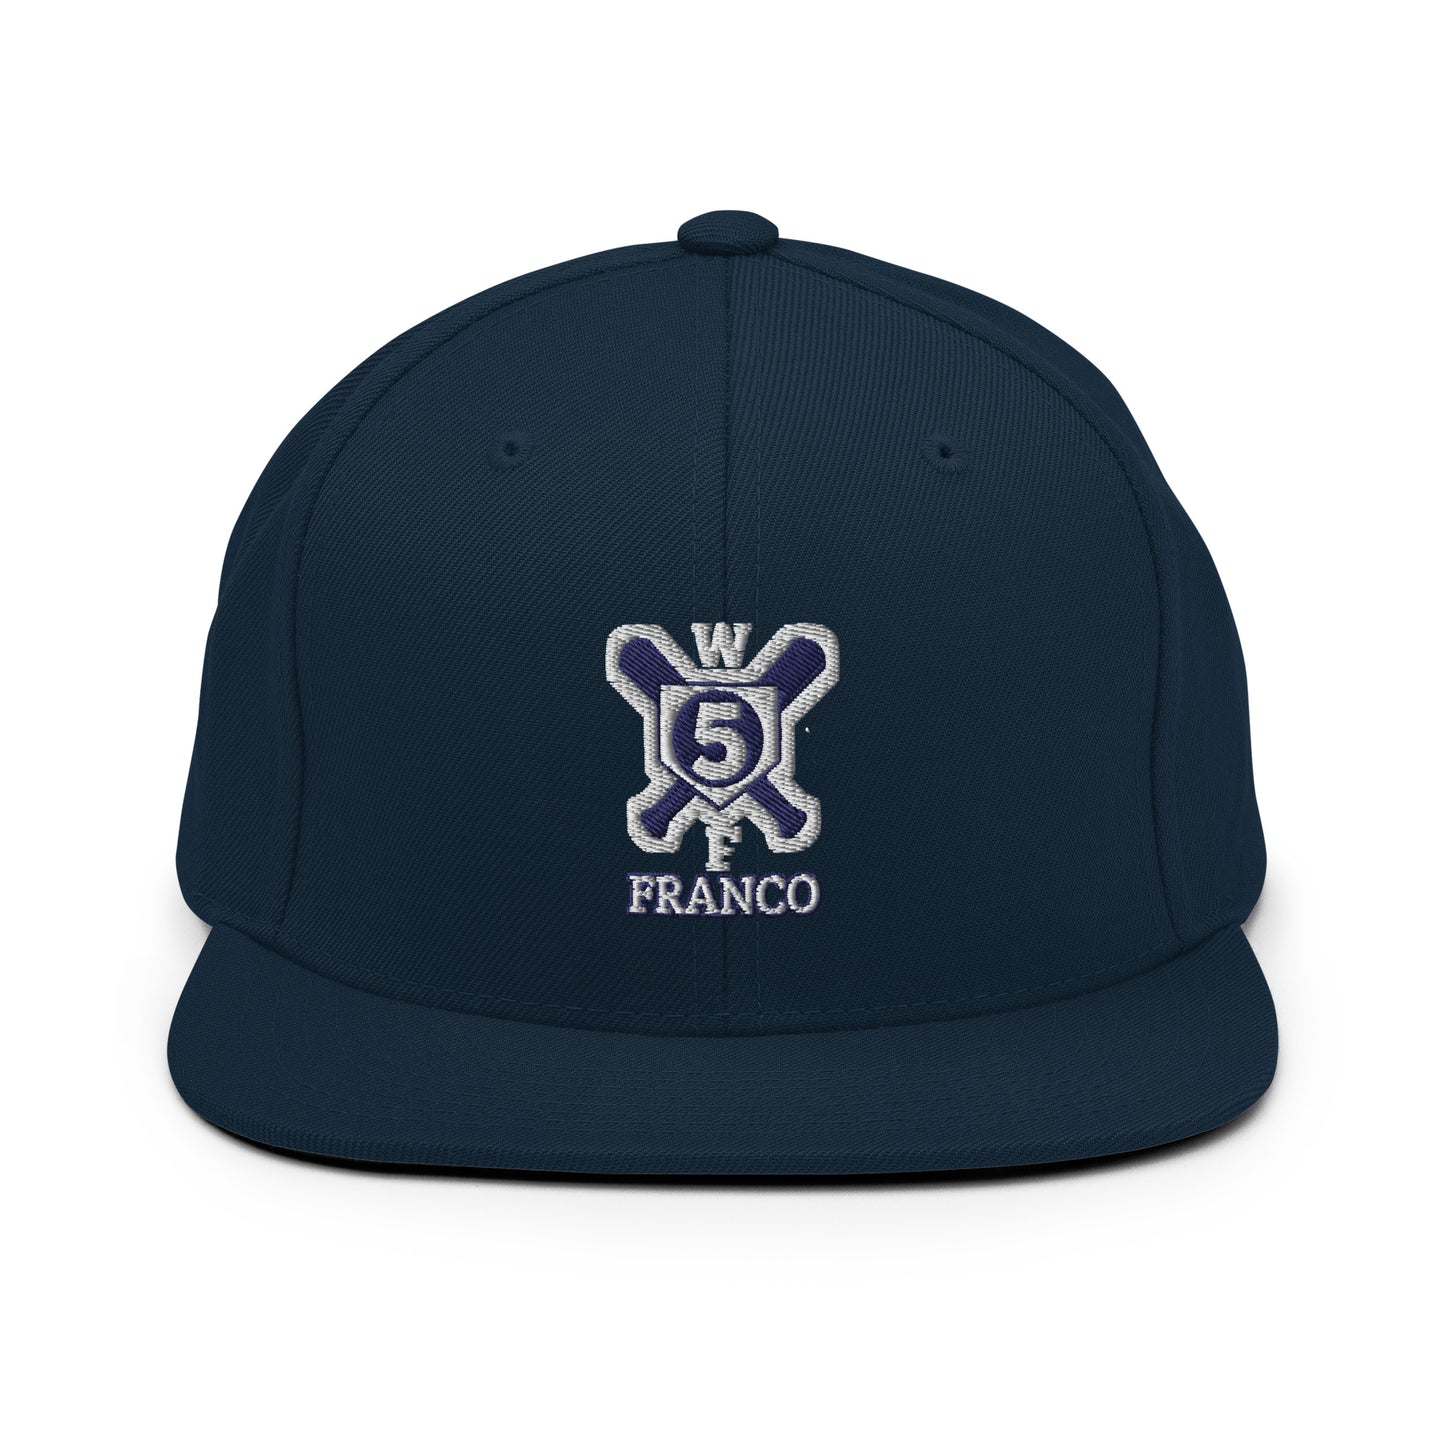 Wander Franco Hat / Wander Franco Snapback Hat